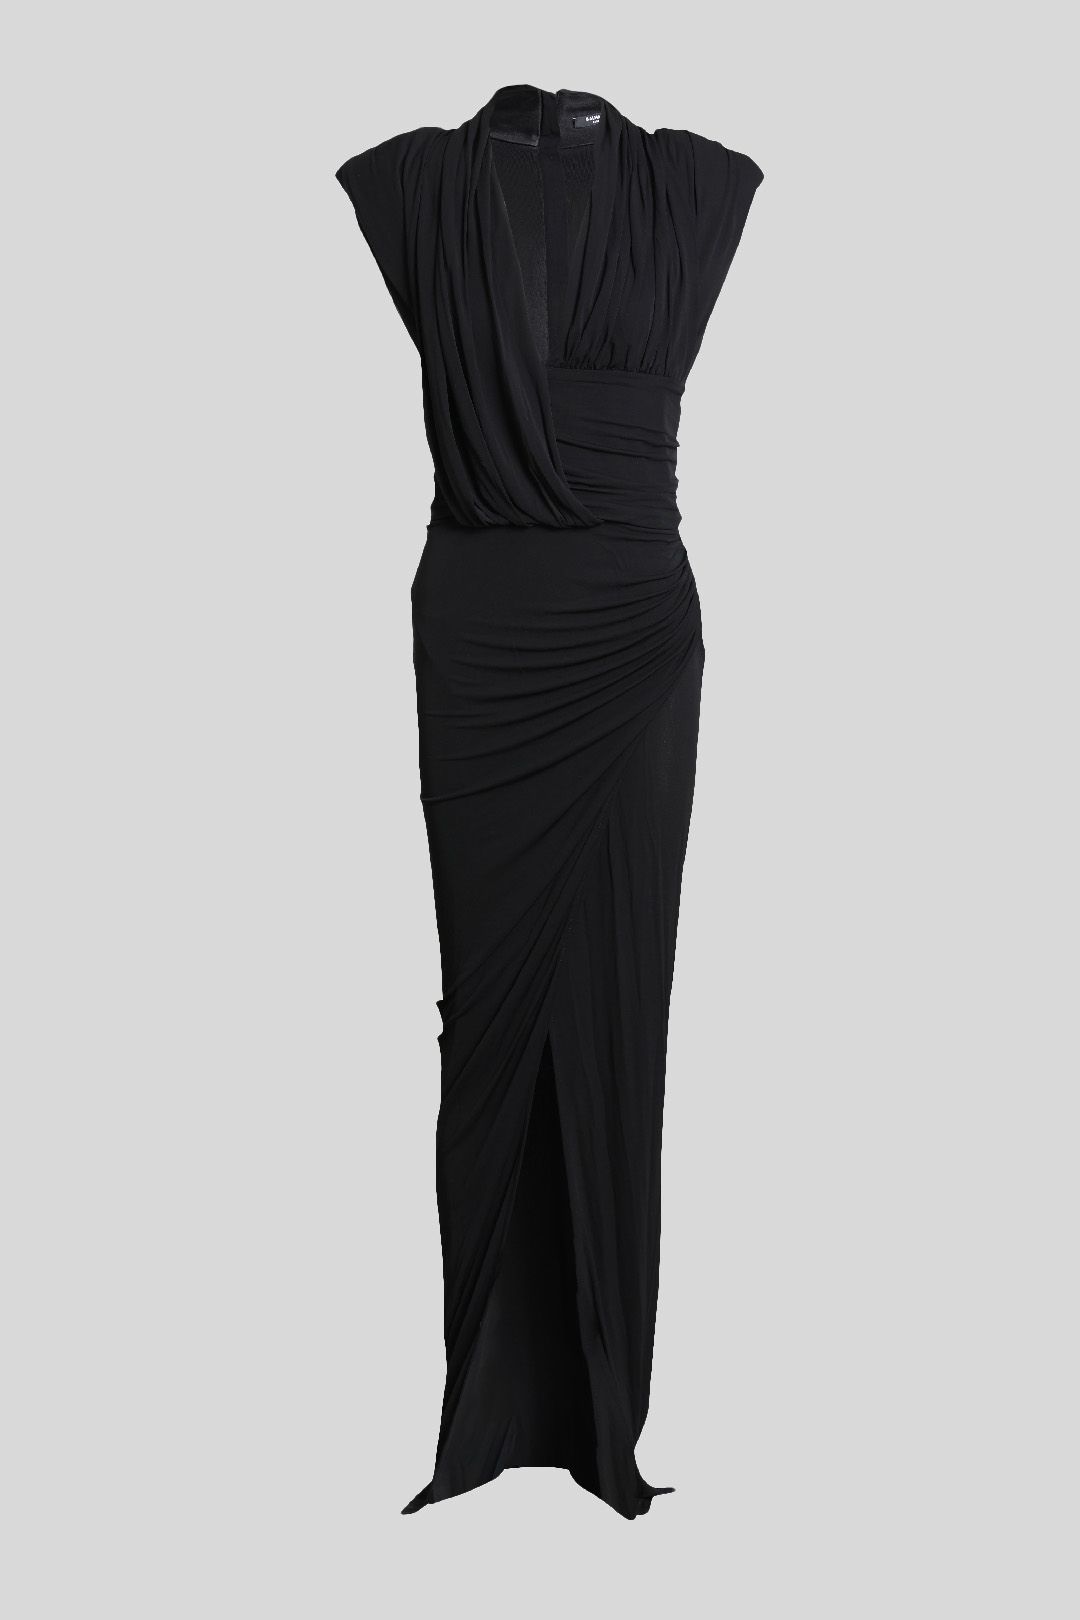 Black Tie Dresses | Designer Outfits for Black Tie Events